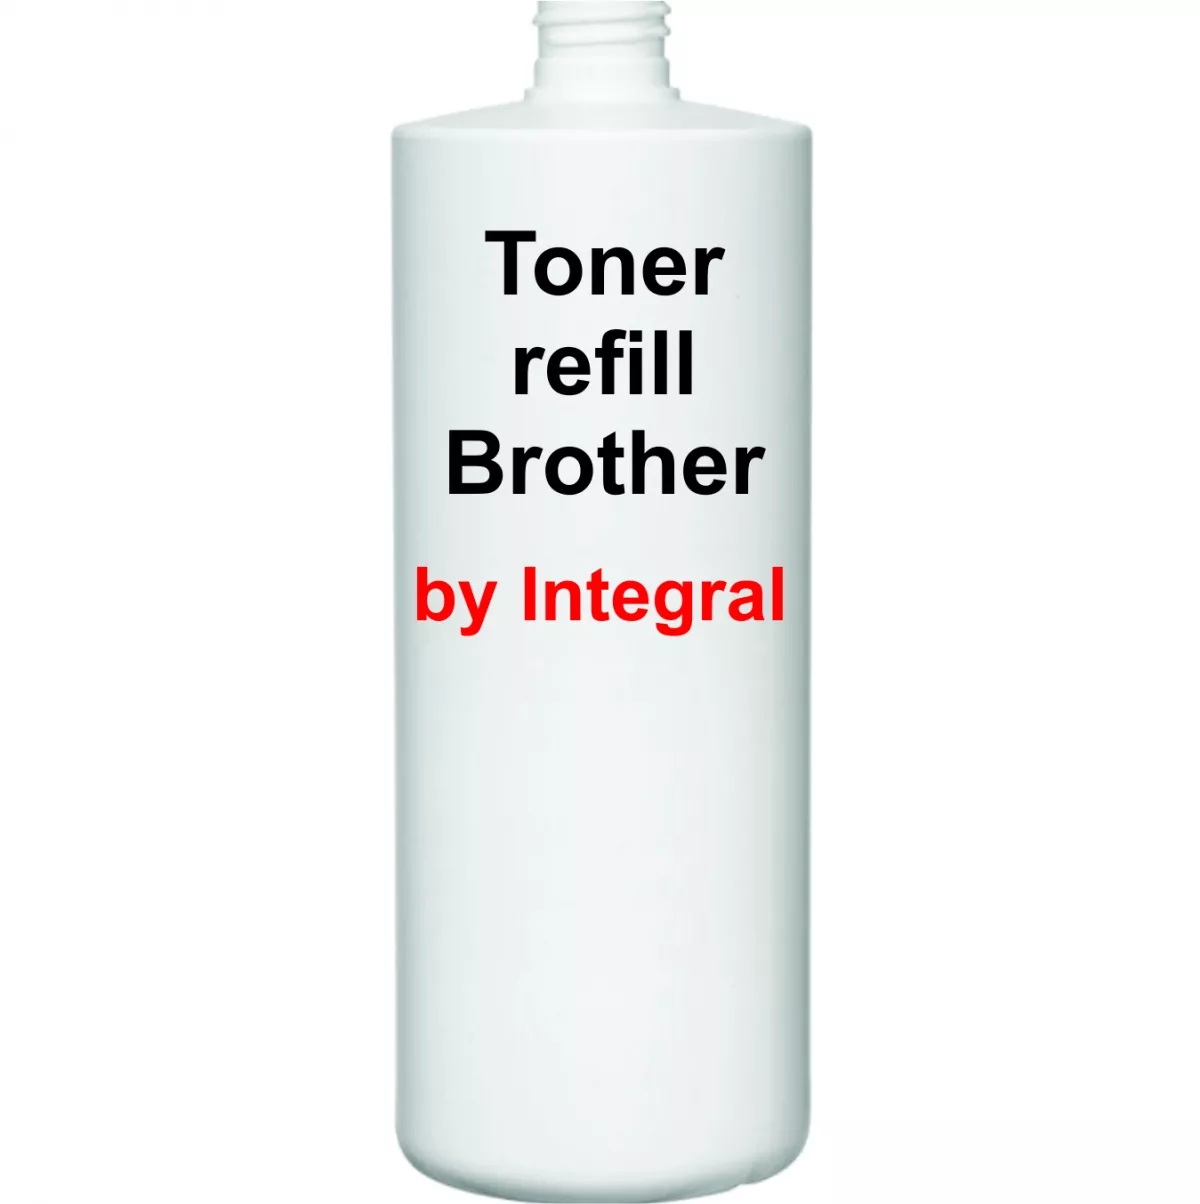 Toner refill Brother TN2010 TN2210 TN2220 1000g by Integral 